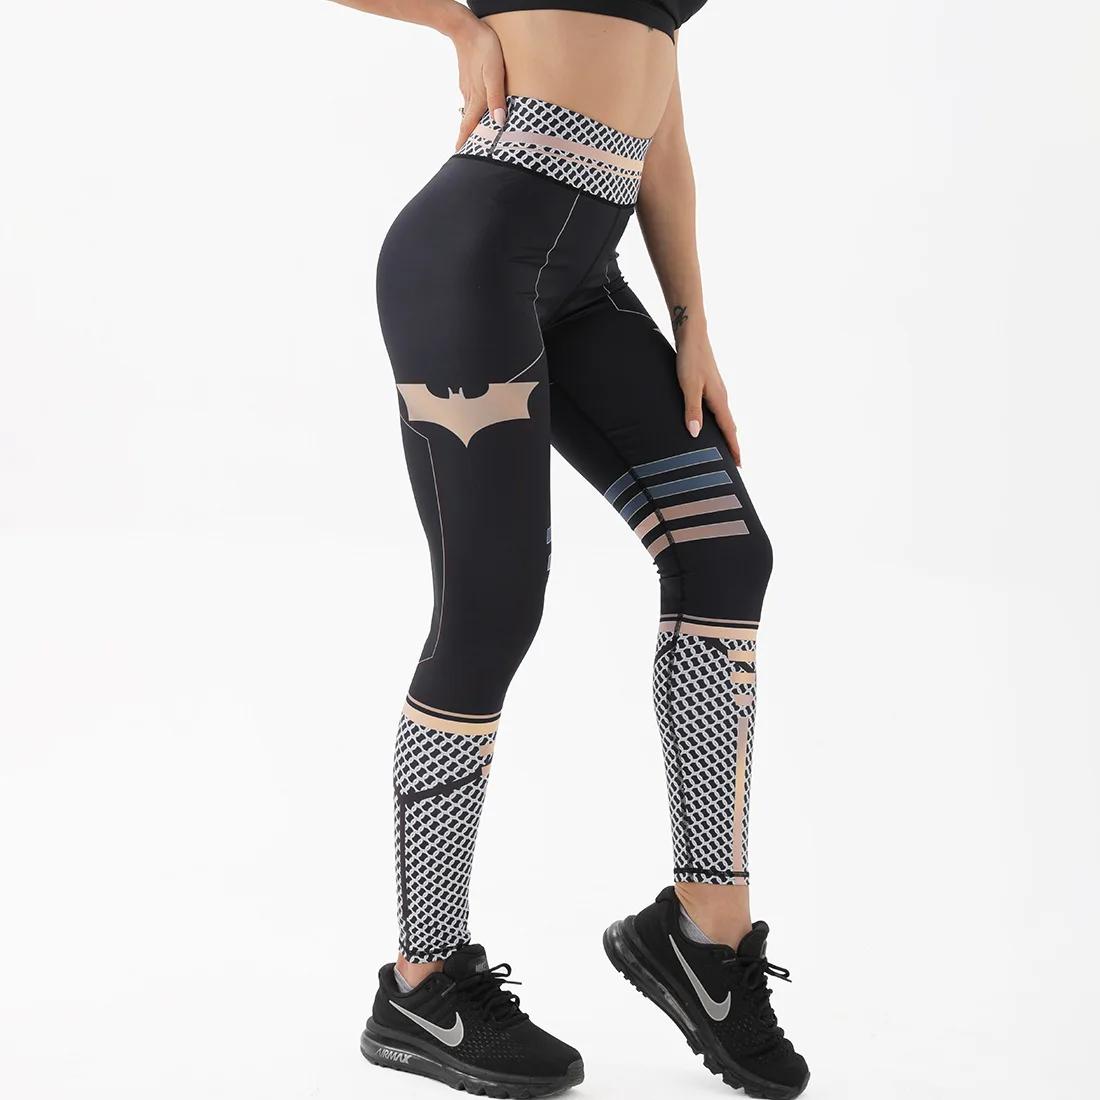 https://ae01.alicdn.com/kf/H4cada45894074bbcb1027961fb9d7f91k/Sport-Leggings-Women-Superhero-3D-Printed-Yoga-Pant-High-Waist-Gym-Fitness-Leggins-Quick-Dry-Running.jpg